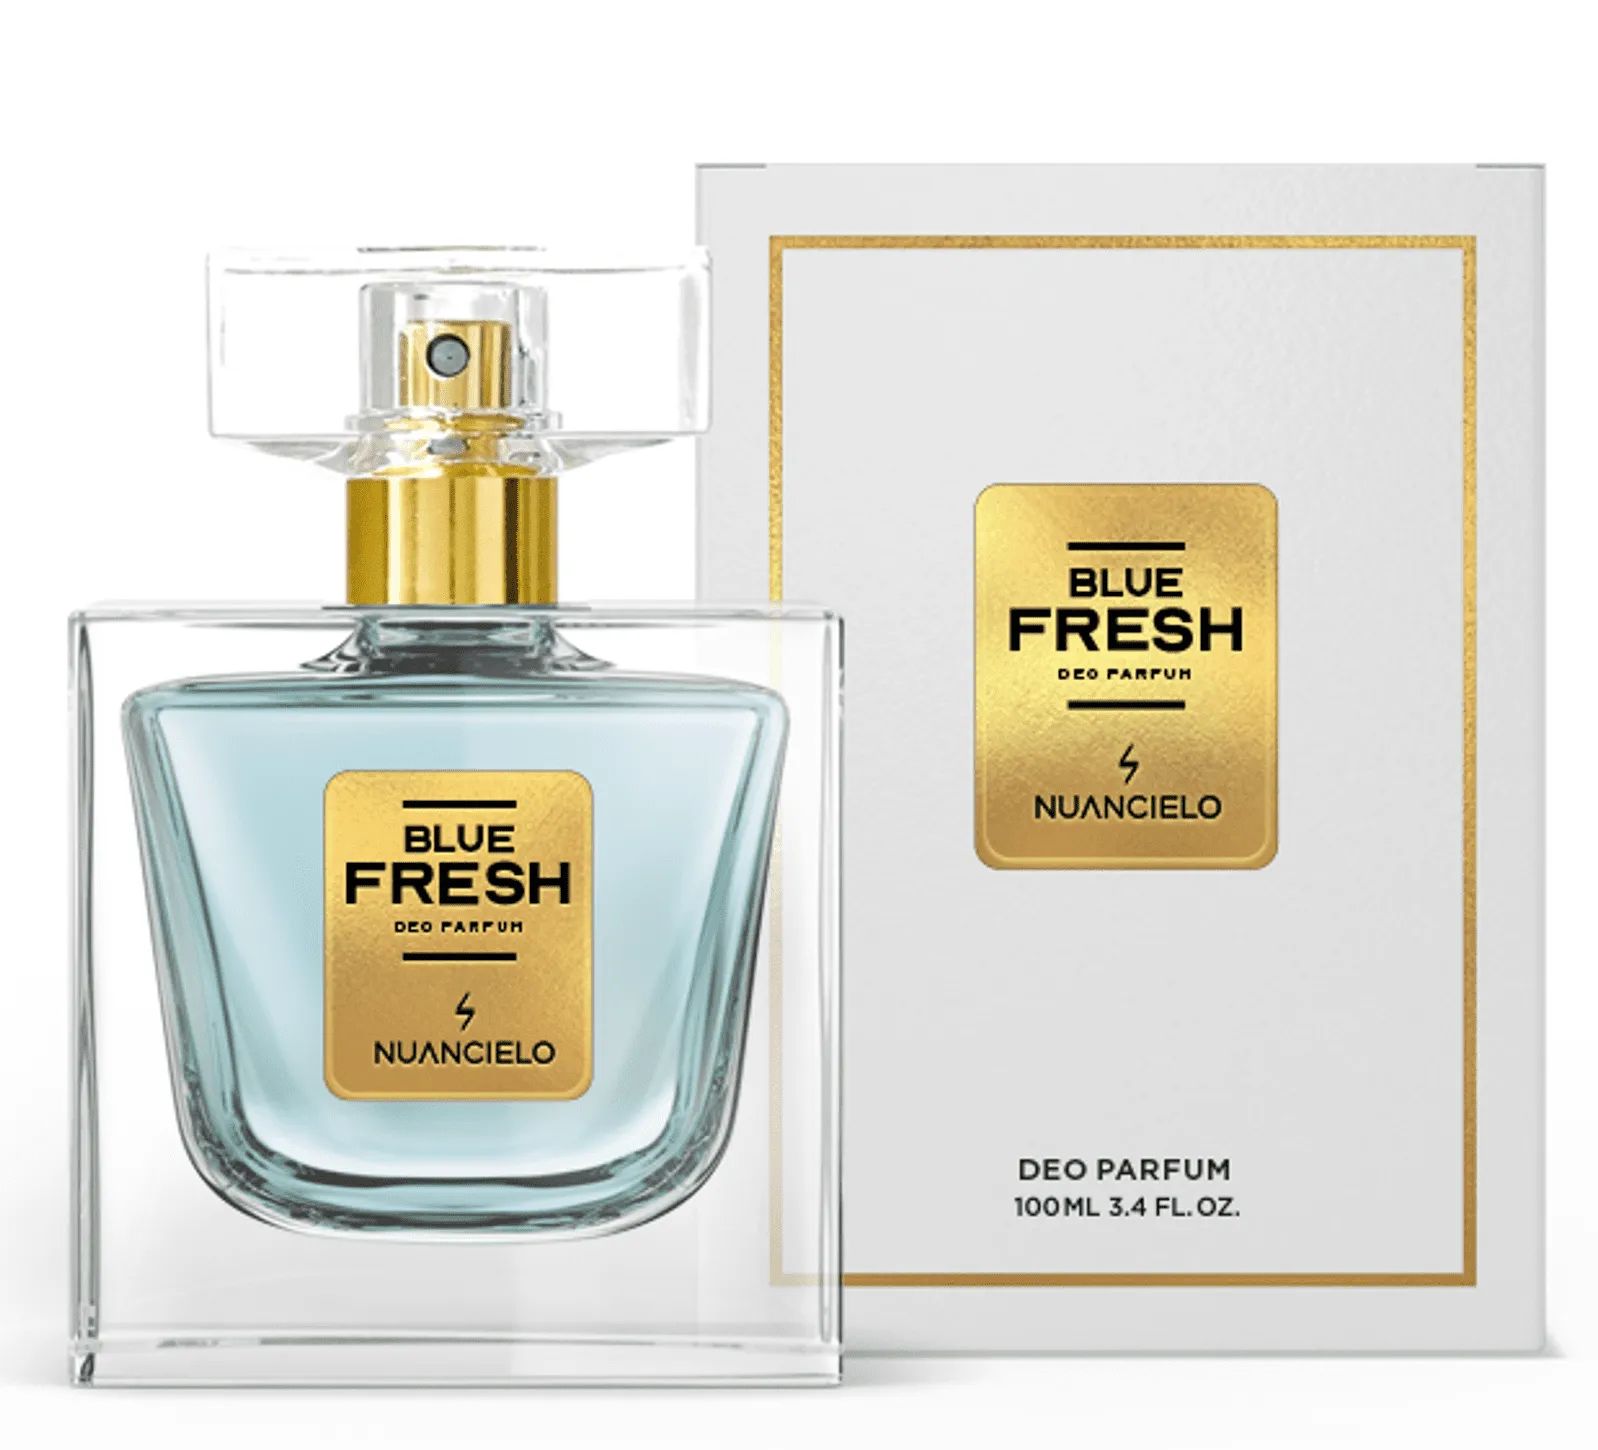 Blue Fresh Nuancielo cologne - a fragrance for men 2020